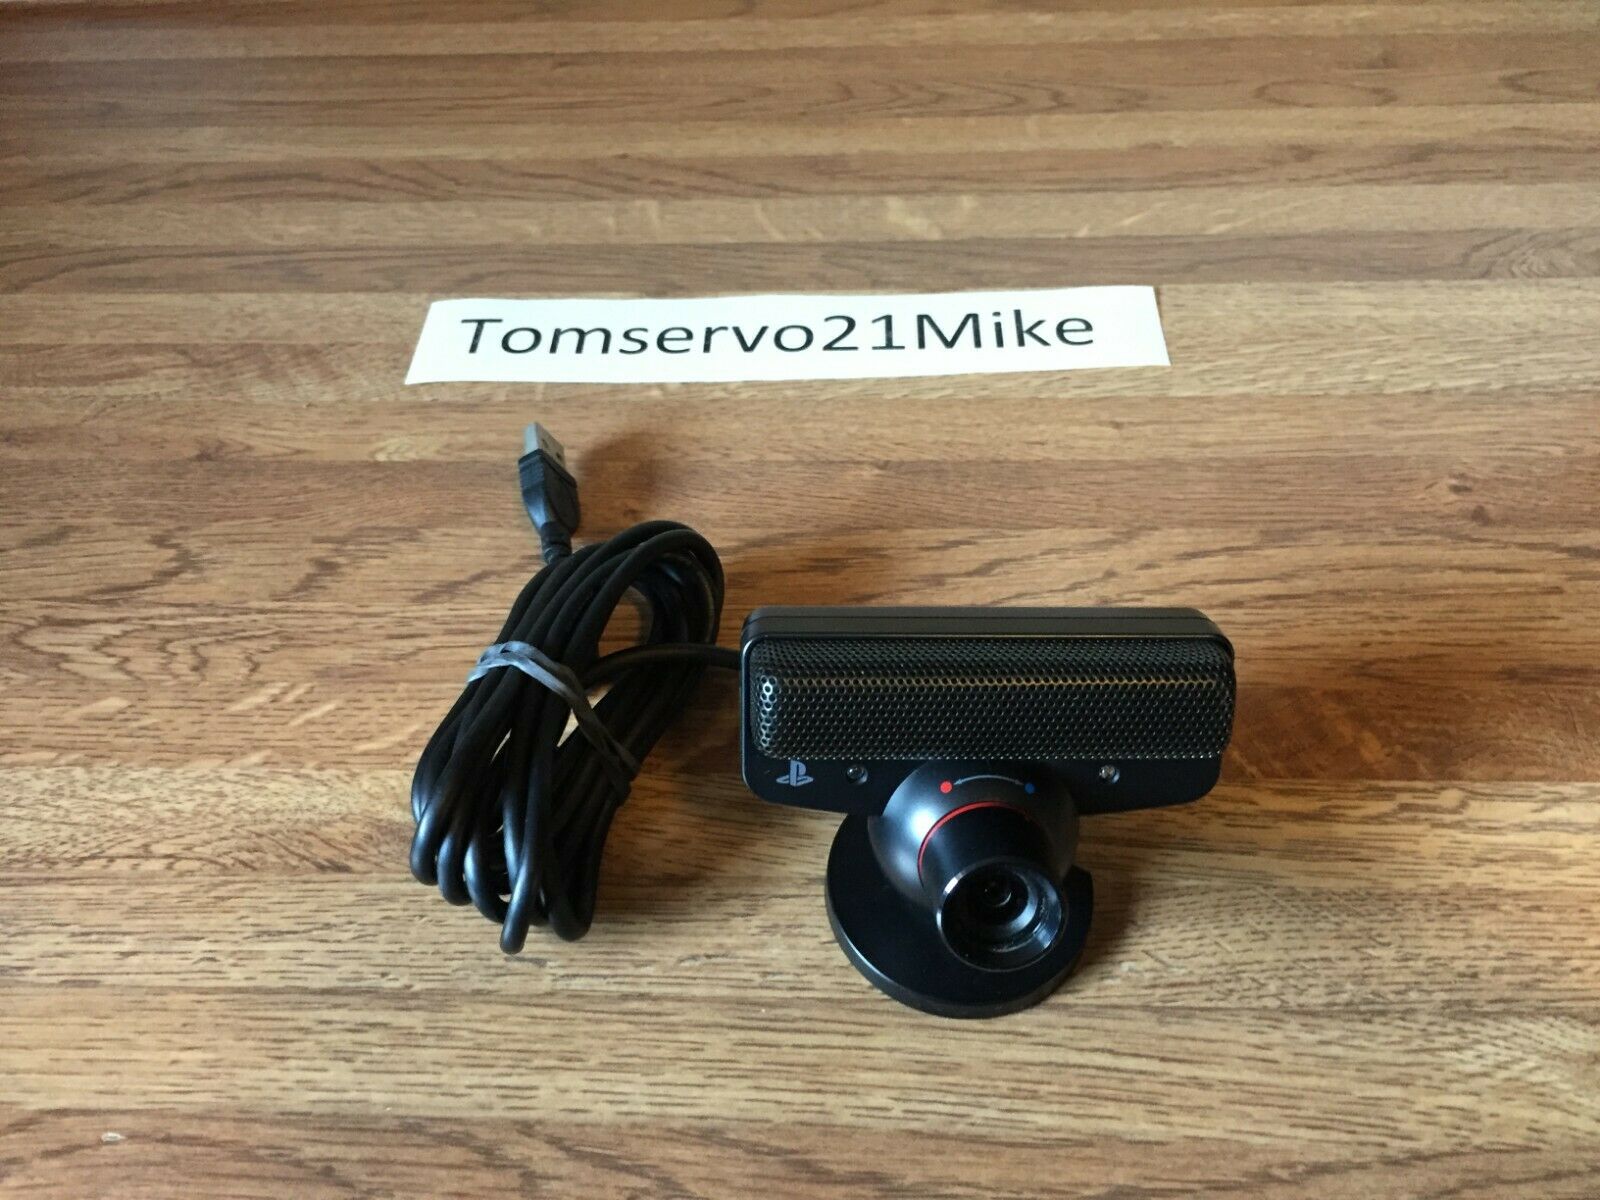 Sony Playstation Ps3 Eye Camera Sleh-00448 - Tested - Free Shipping